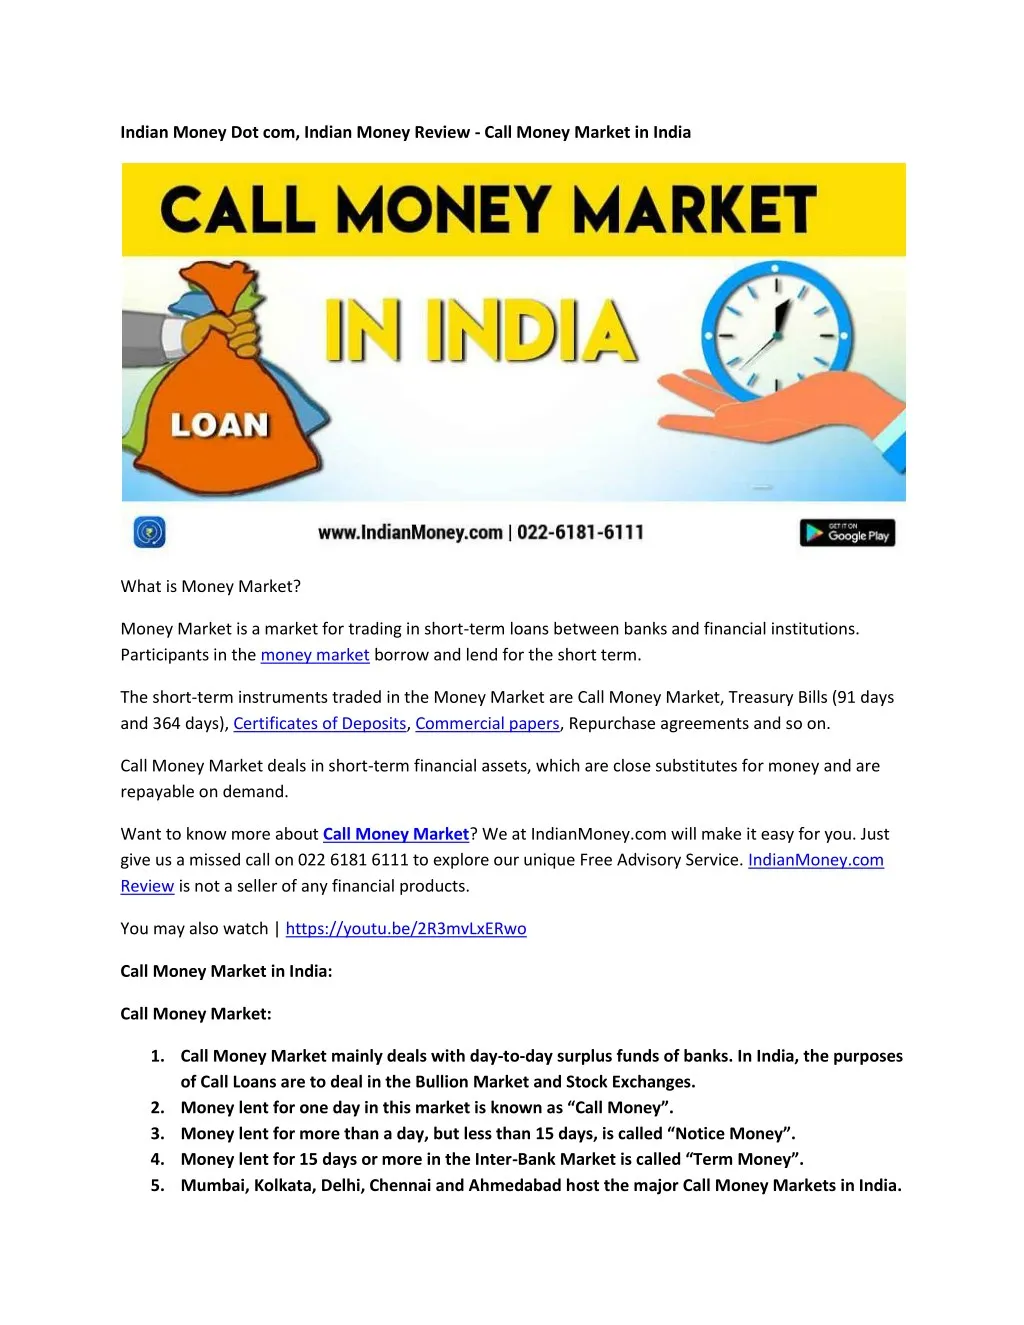 indian money dot com indian money review call